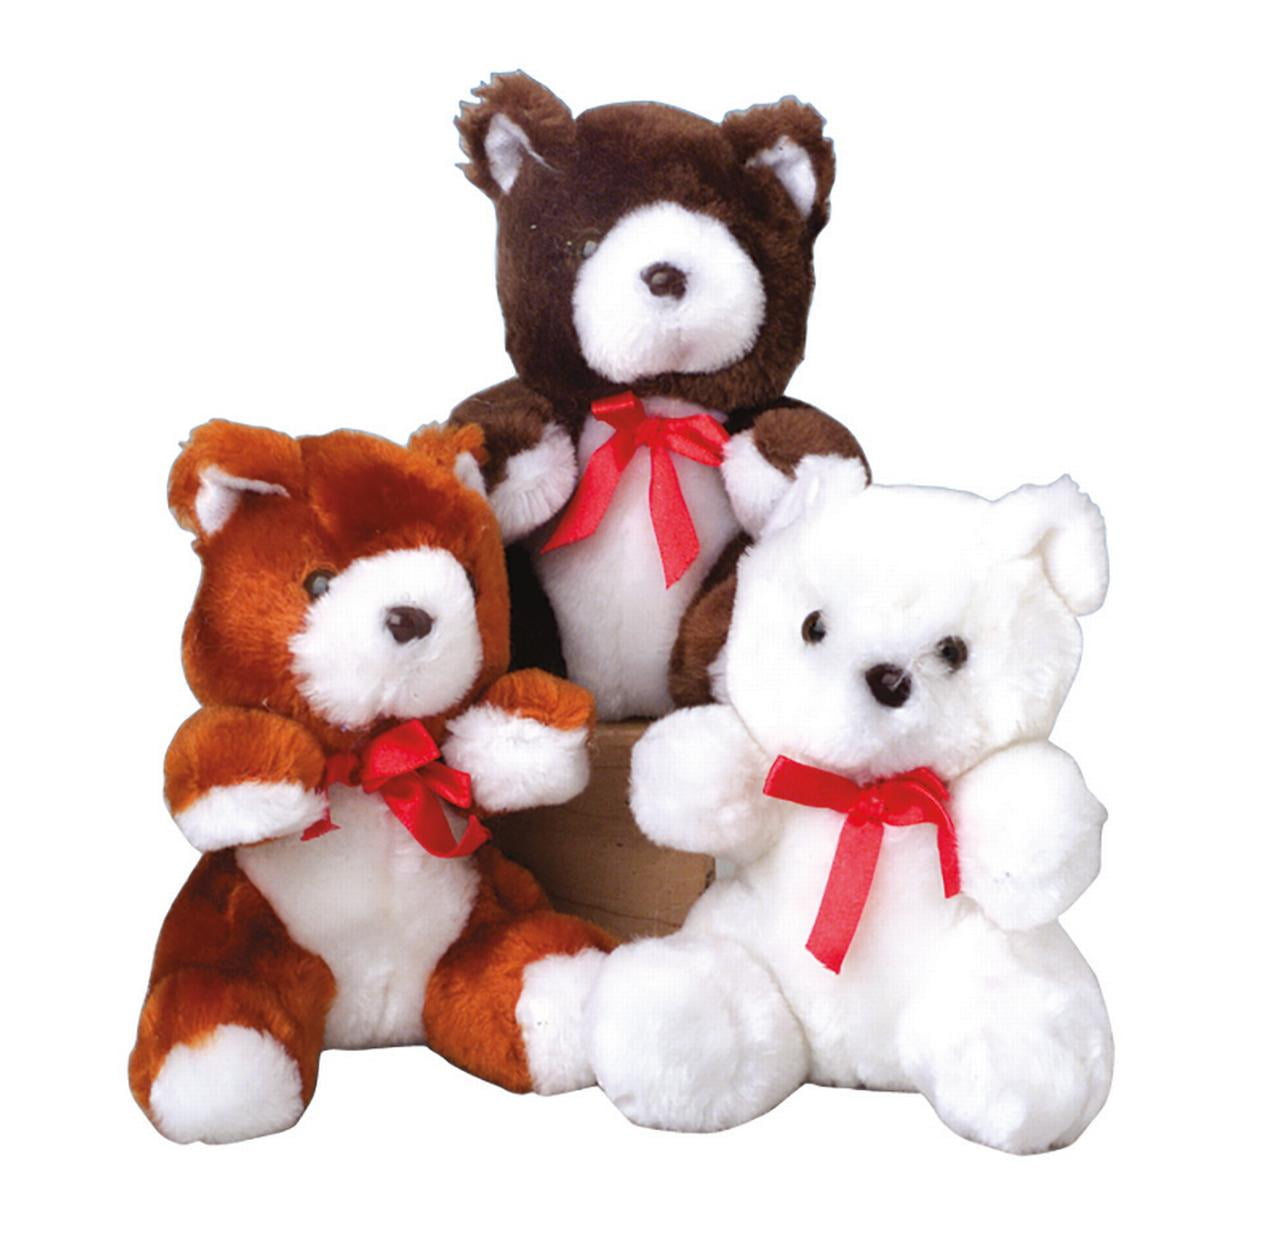 Small Mini Teddy Bear Stuffed Animal Doll Plush Toy Kids Grateful Jxyi rIq xhl 